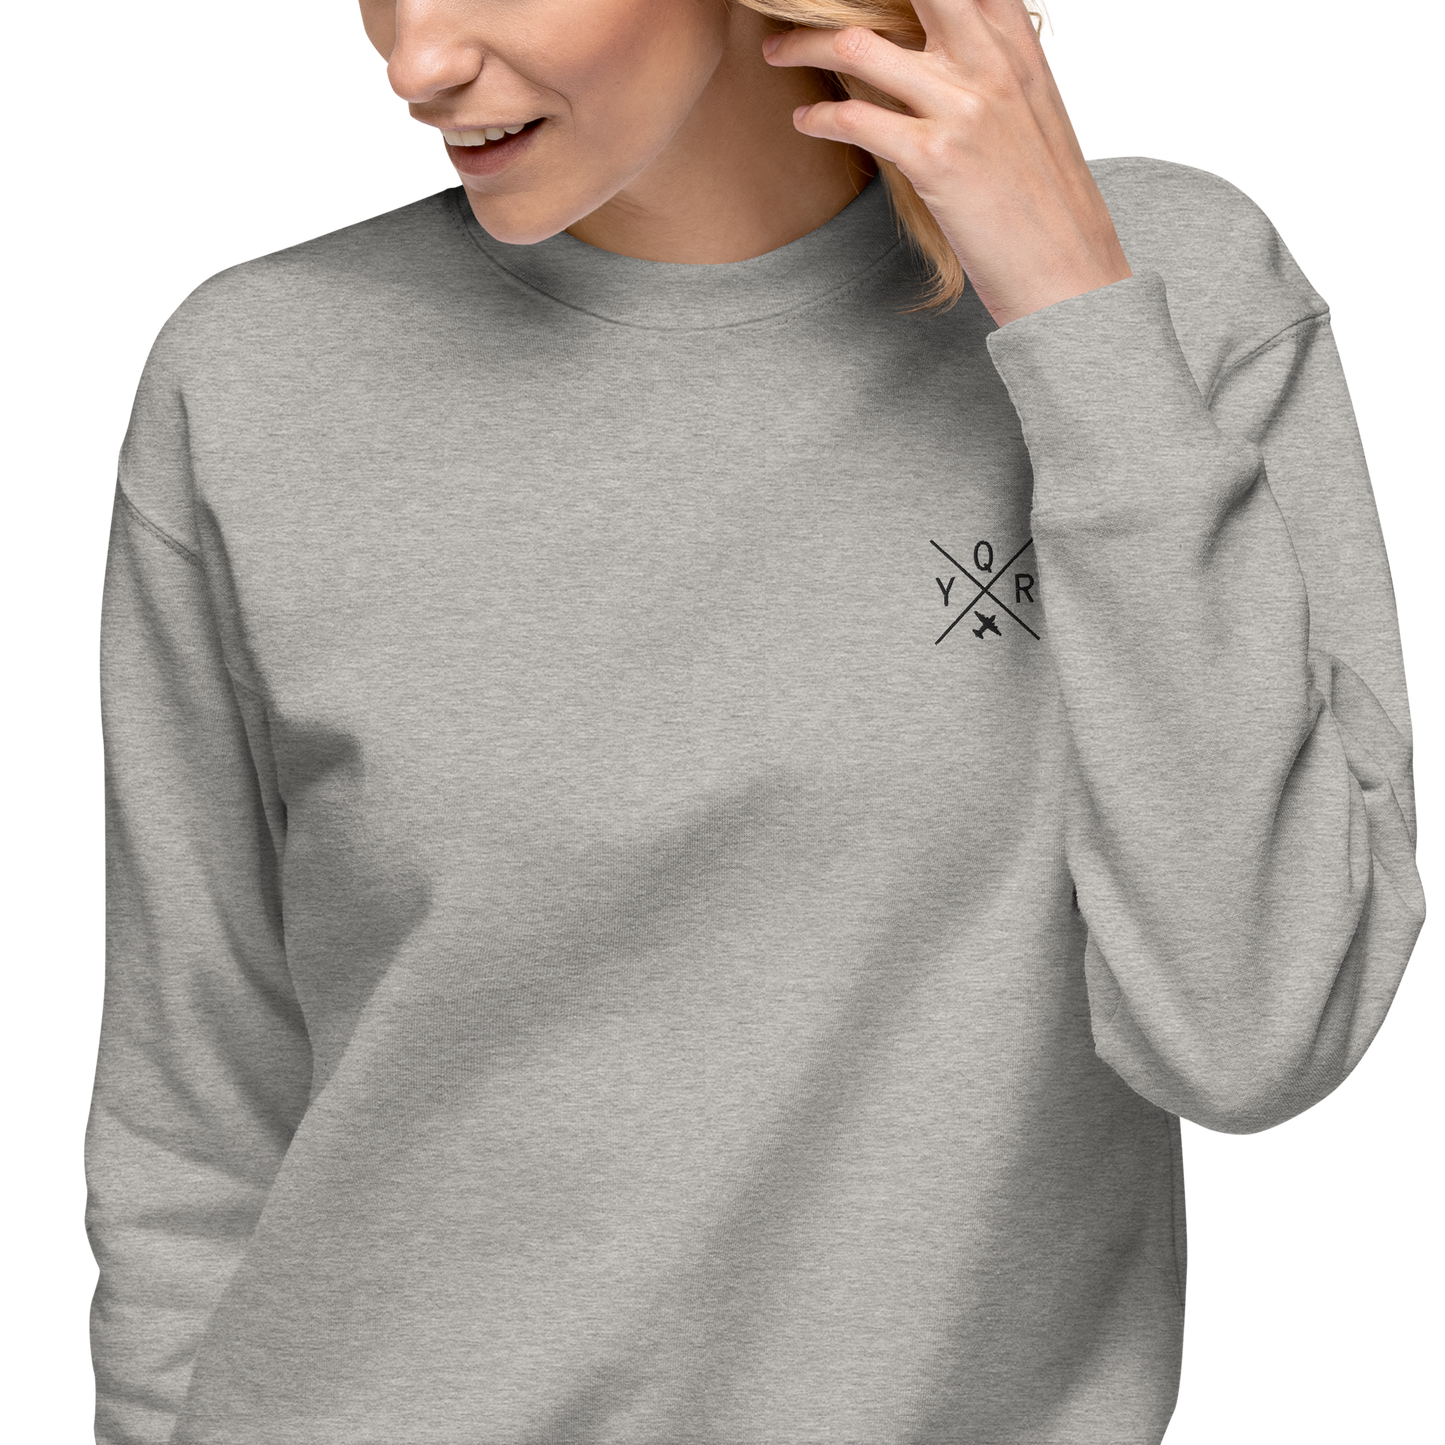 YHM Designs - YQR Regina Premium Sweatshirt - Crossed-X Design with Airport Code and Vintage Propliner - Black Embroidery - Image 03